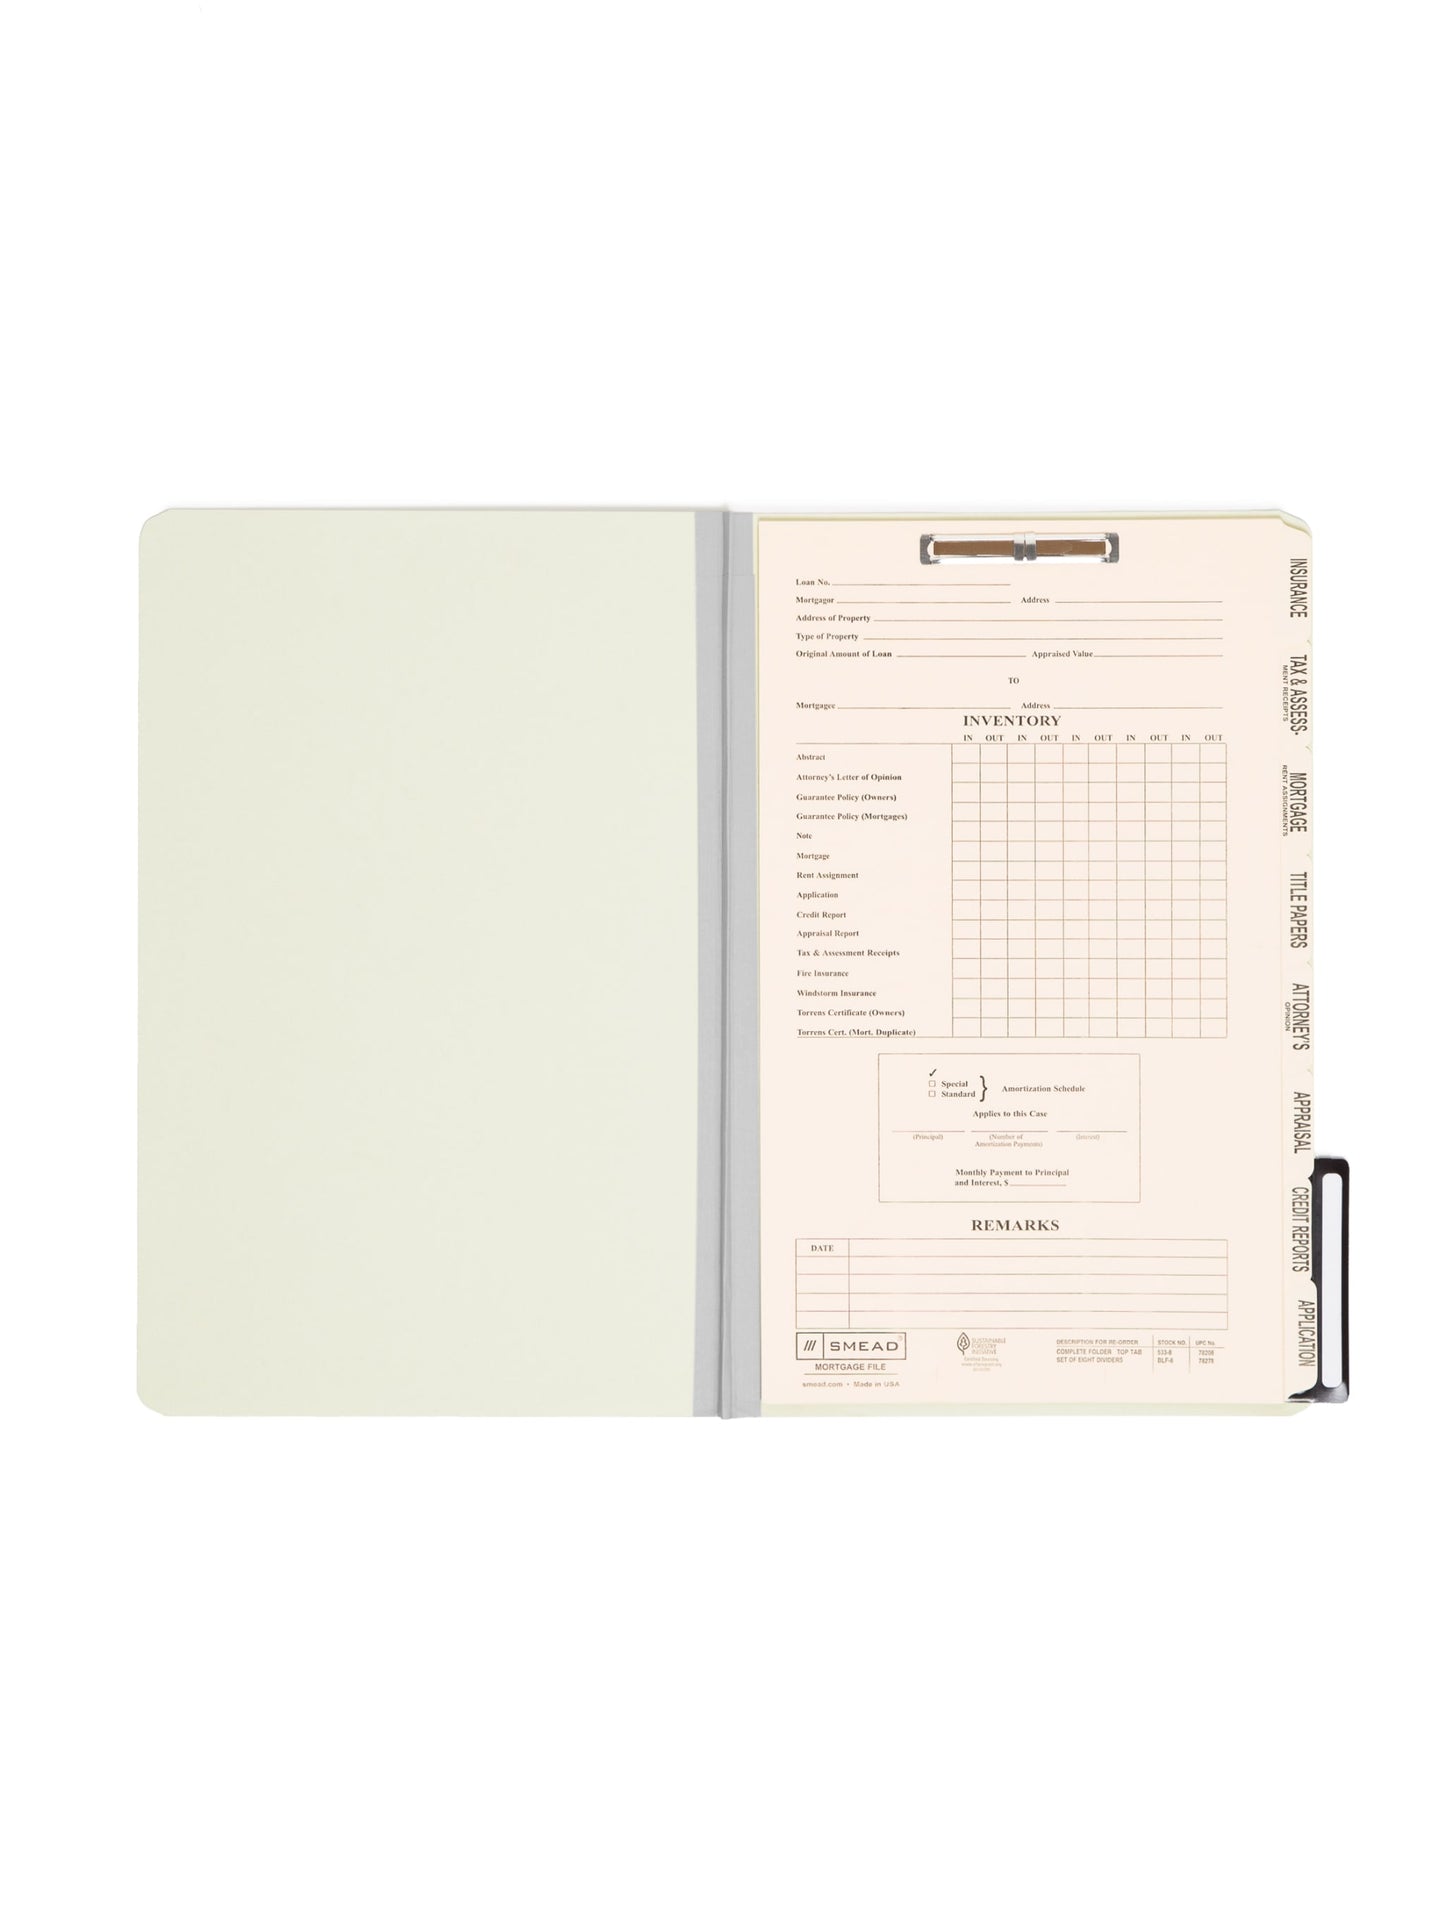 Pressboard Mortgage File Folders, Gray/Green Color, Legal Size, Set of 0, 30086486782082